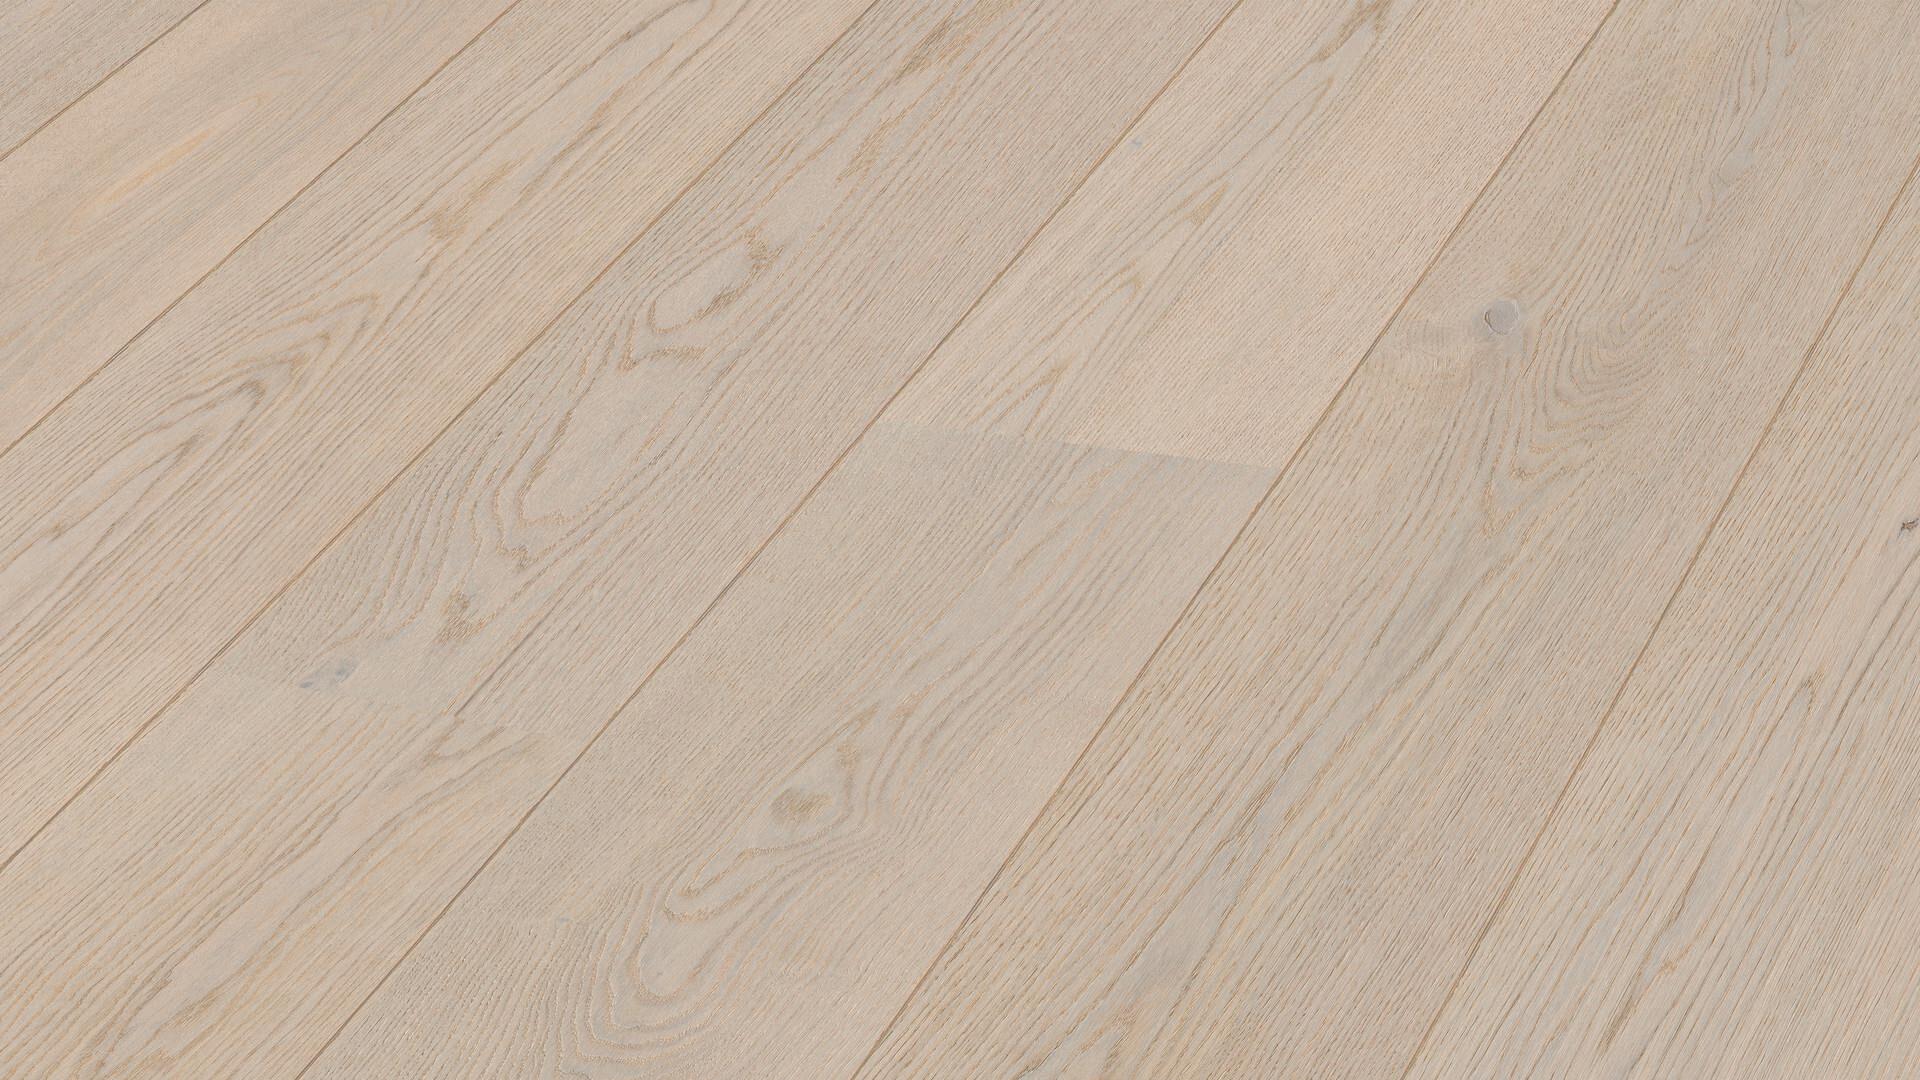 Lindura houten vloer HD 400 Eik natuur arctic-wit 8917